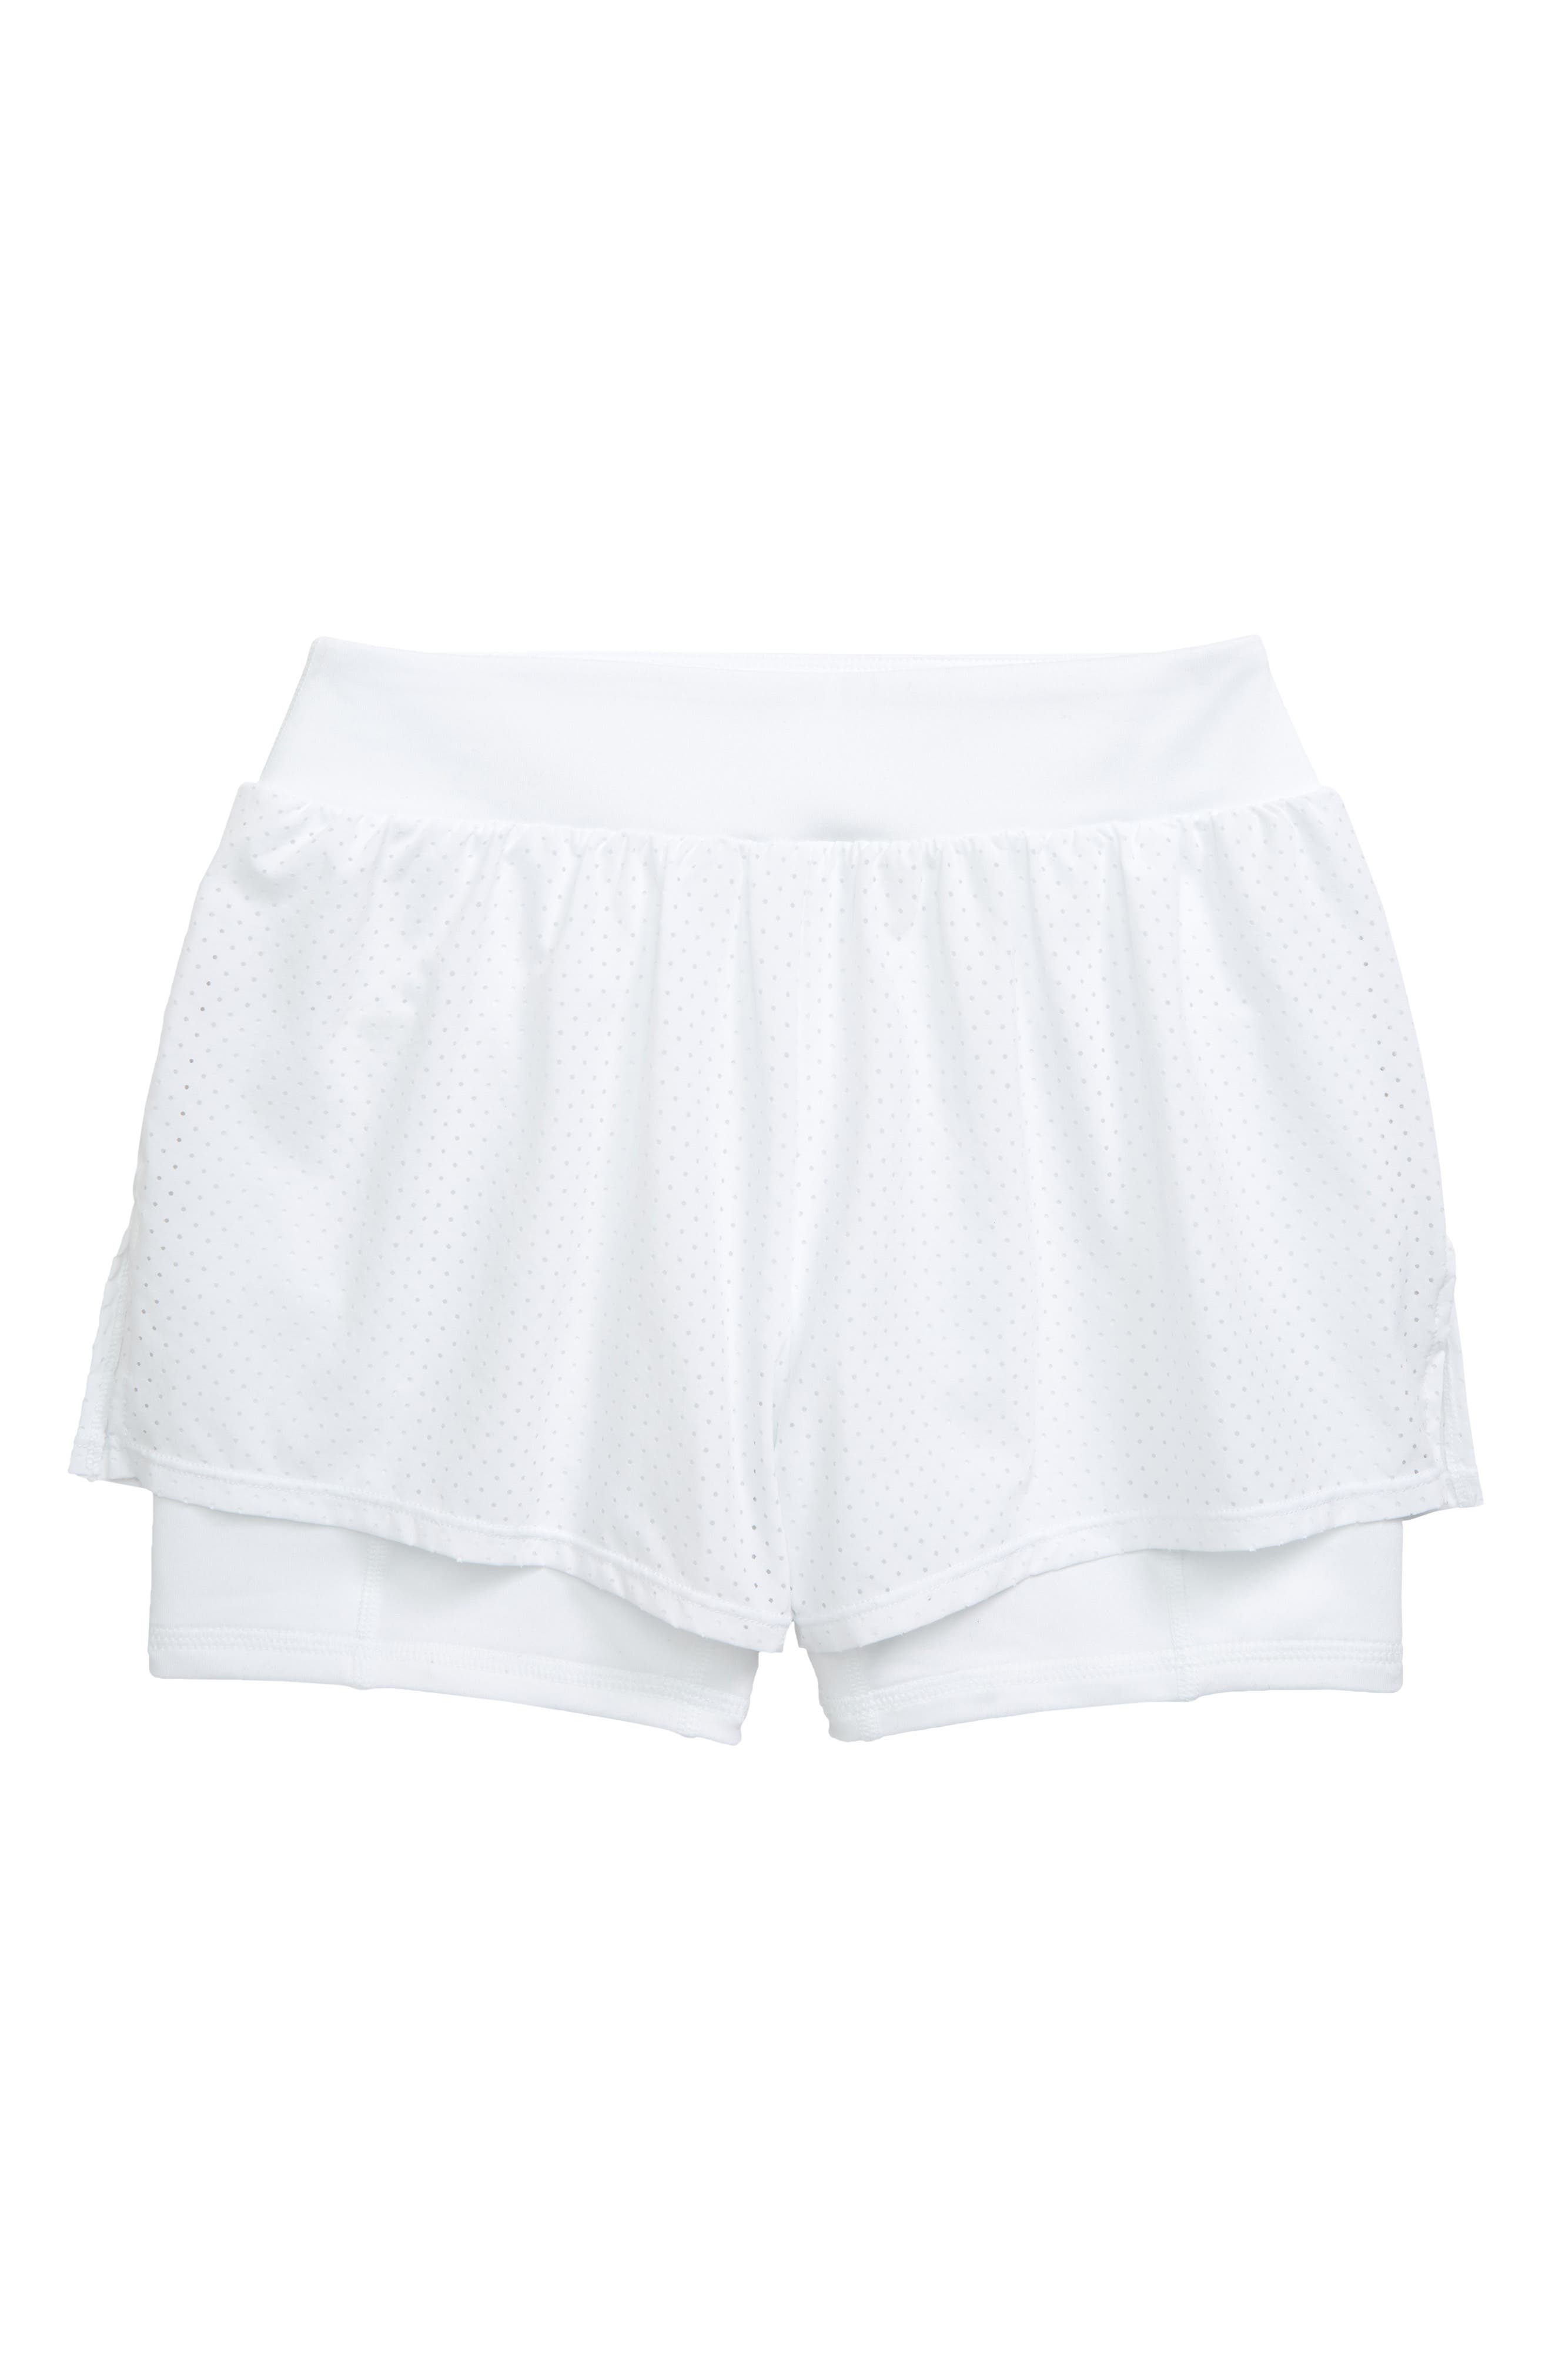 girls white athletic shorts